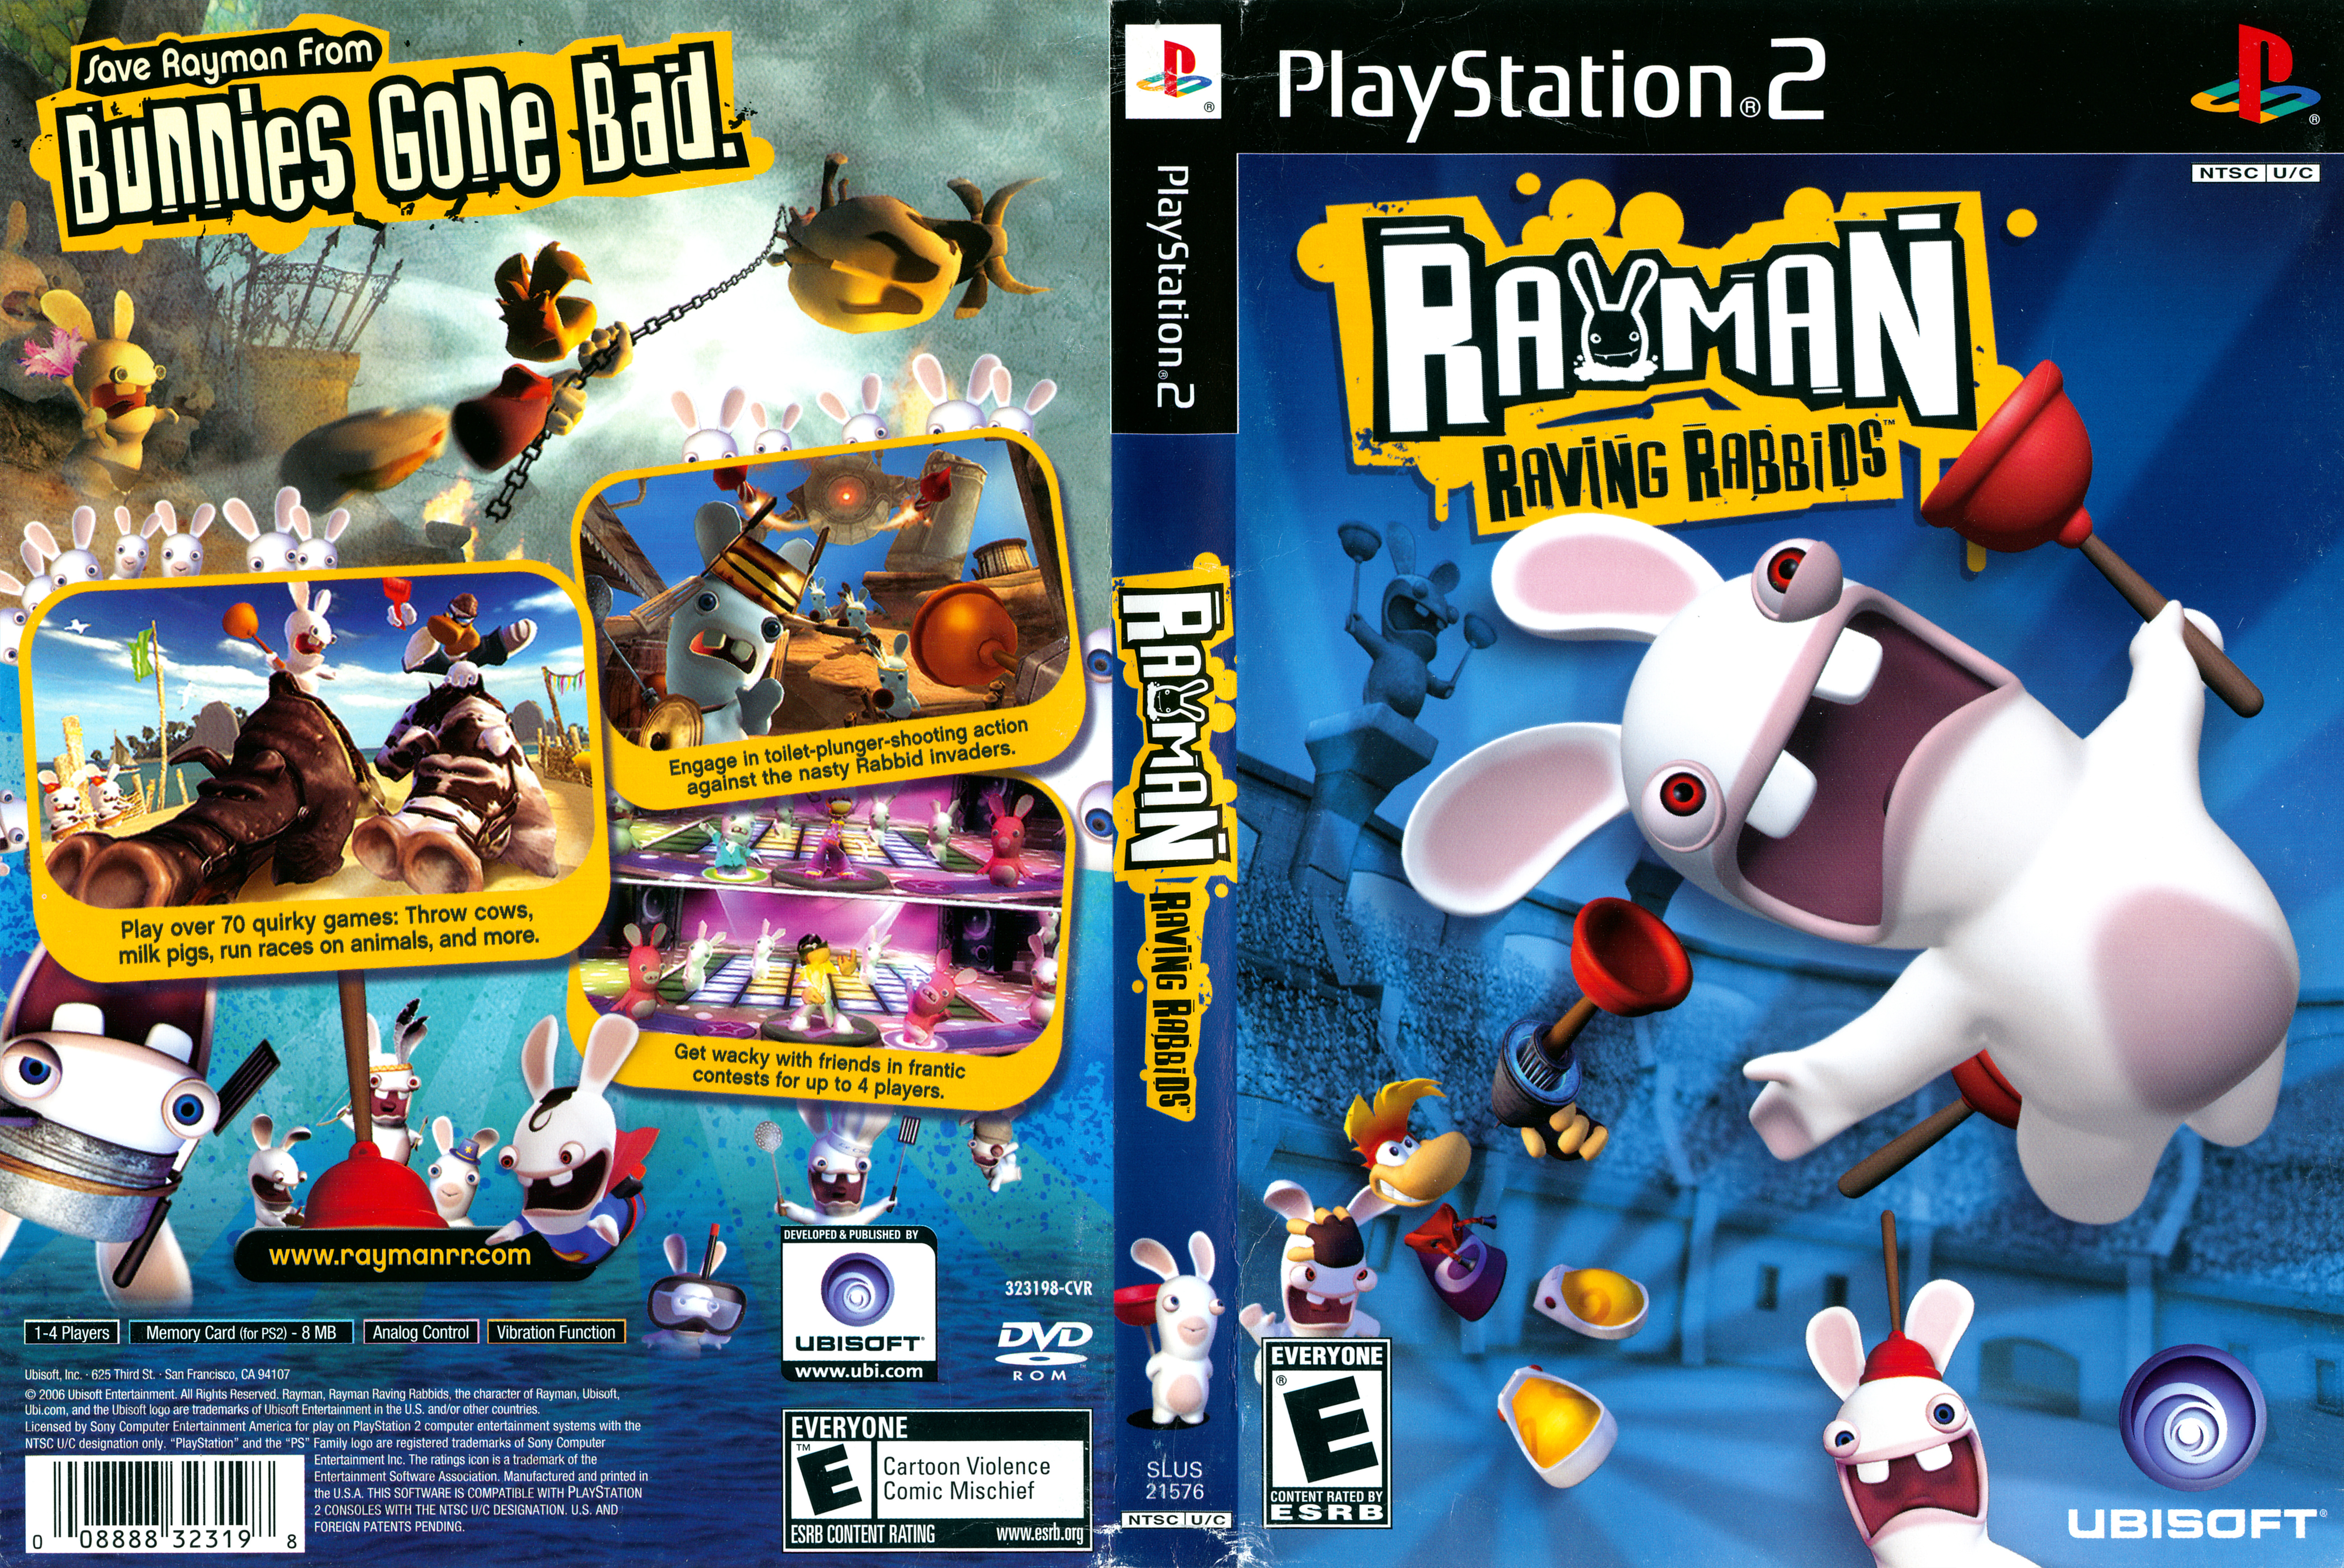 Rayman 2 - Revolution ROM Download - Sony PlayStation 2(PS2)